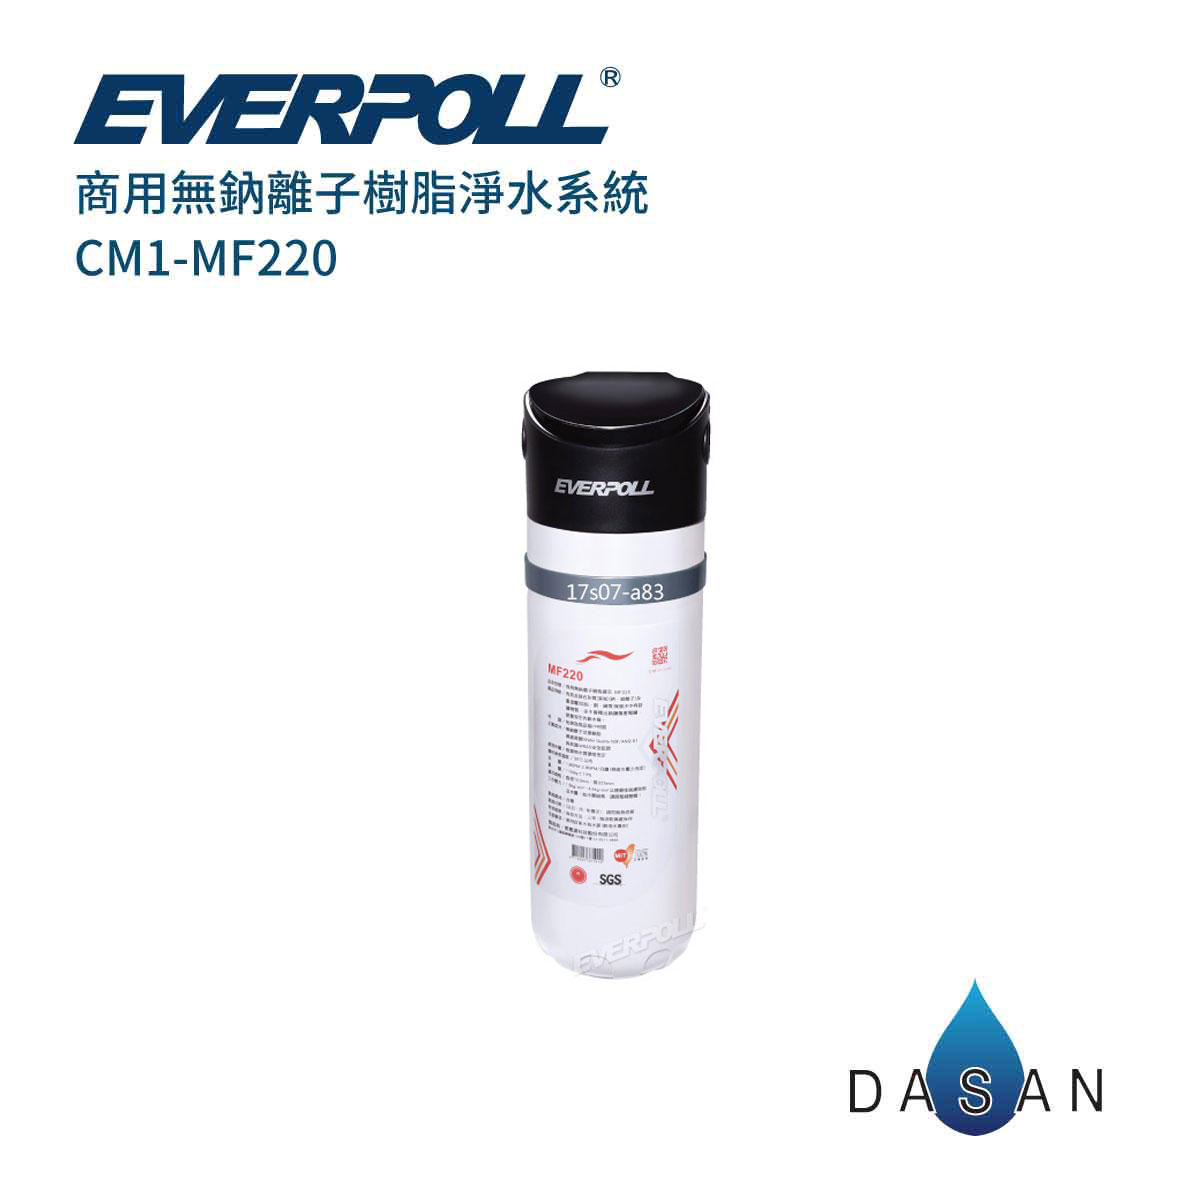 【EVERPOLL】CM1-MF220 CM1MF220商用無鈉離子樹脂淨水系統 大山淨水